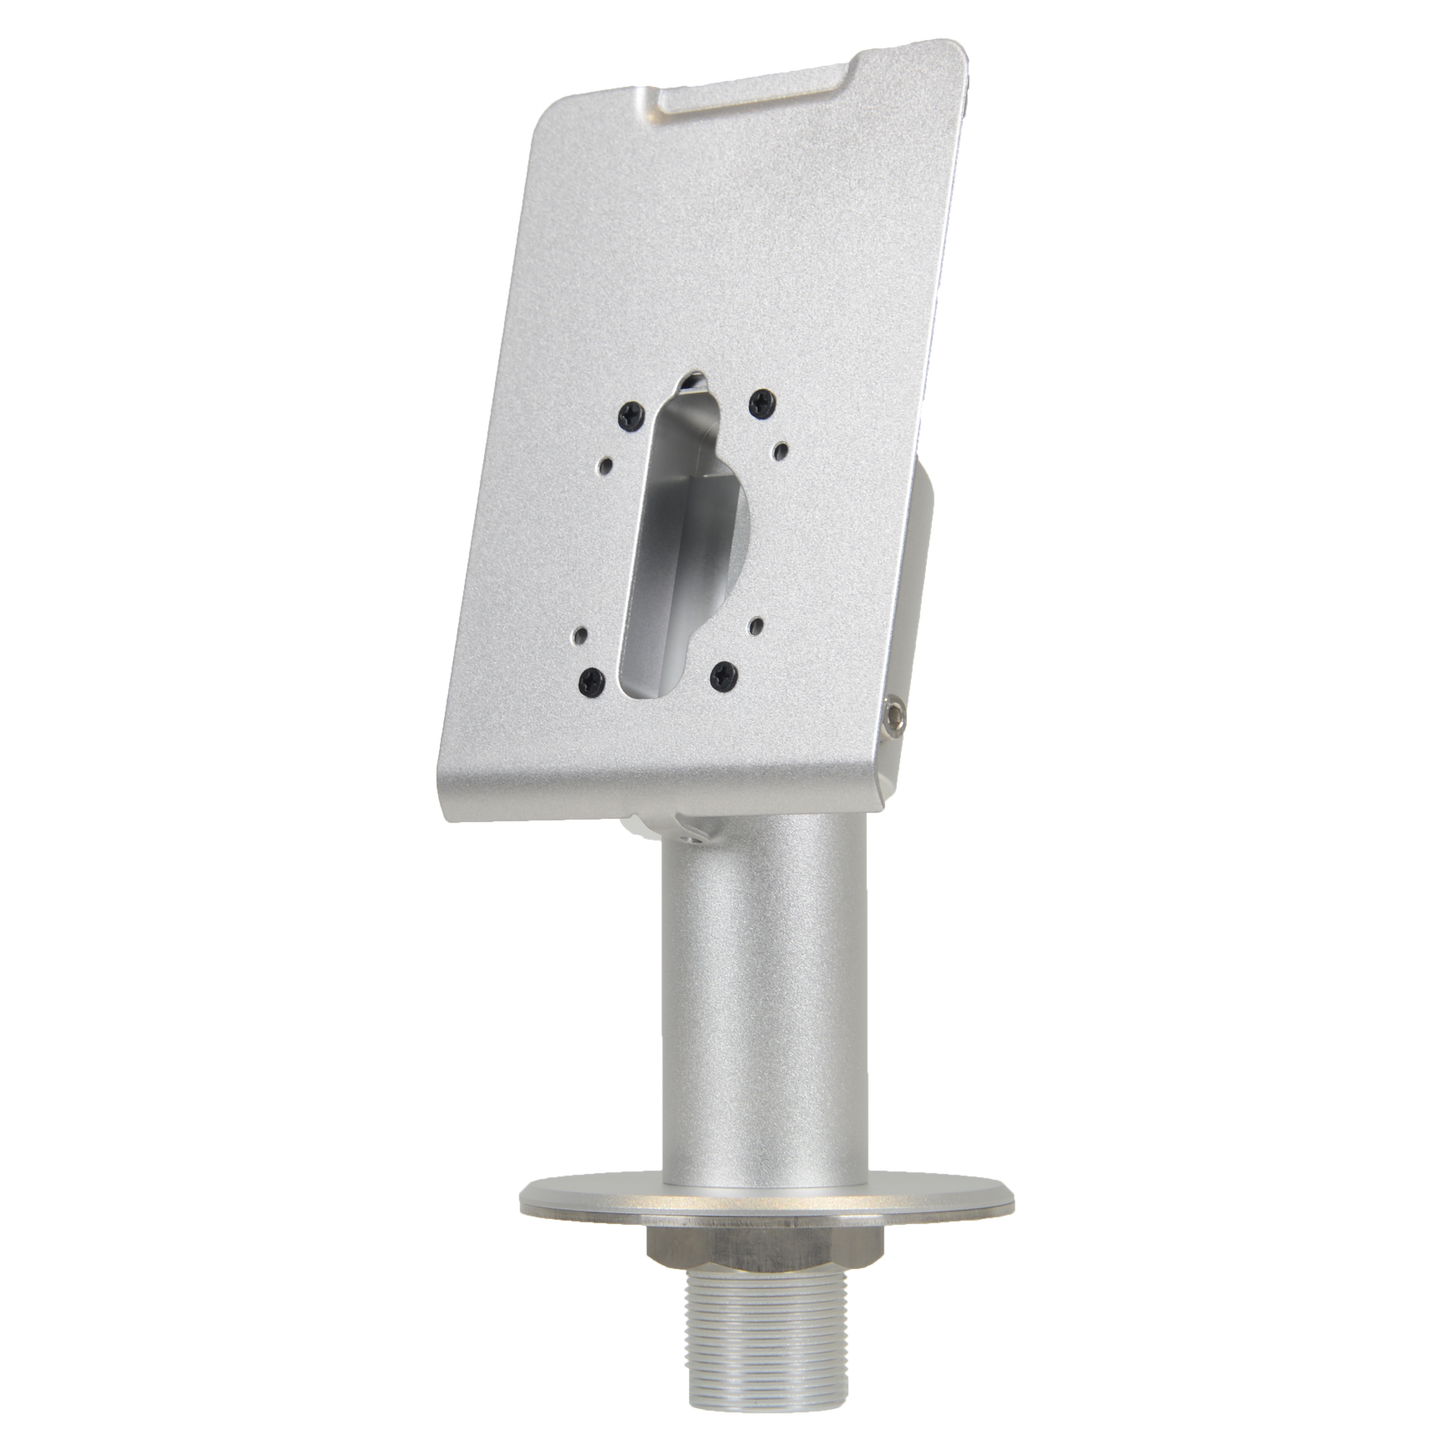 Soporte vertical para torniquetes - Específico para dispositivos de reconocimiento facial - Compatible con ZK-PROFACEX-TD - Orificios de conexión - 152 mm (H) x 50 mm (w) x 90 mm (Ø) - Fabricado en aleación de aluminio